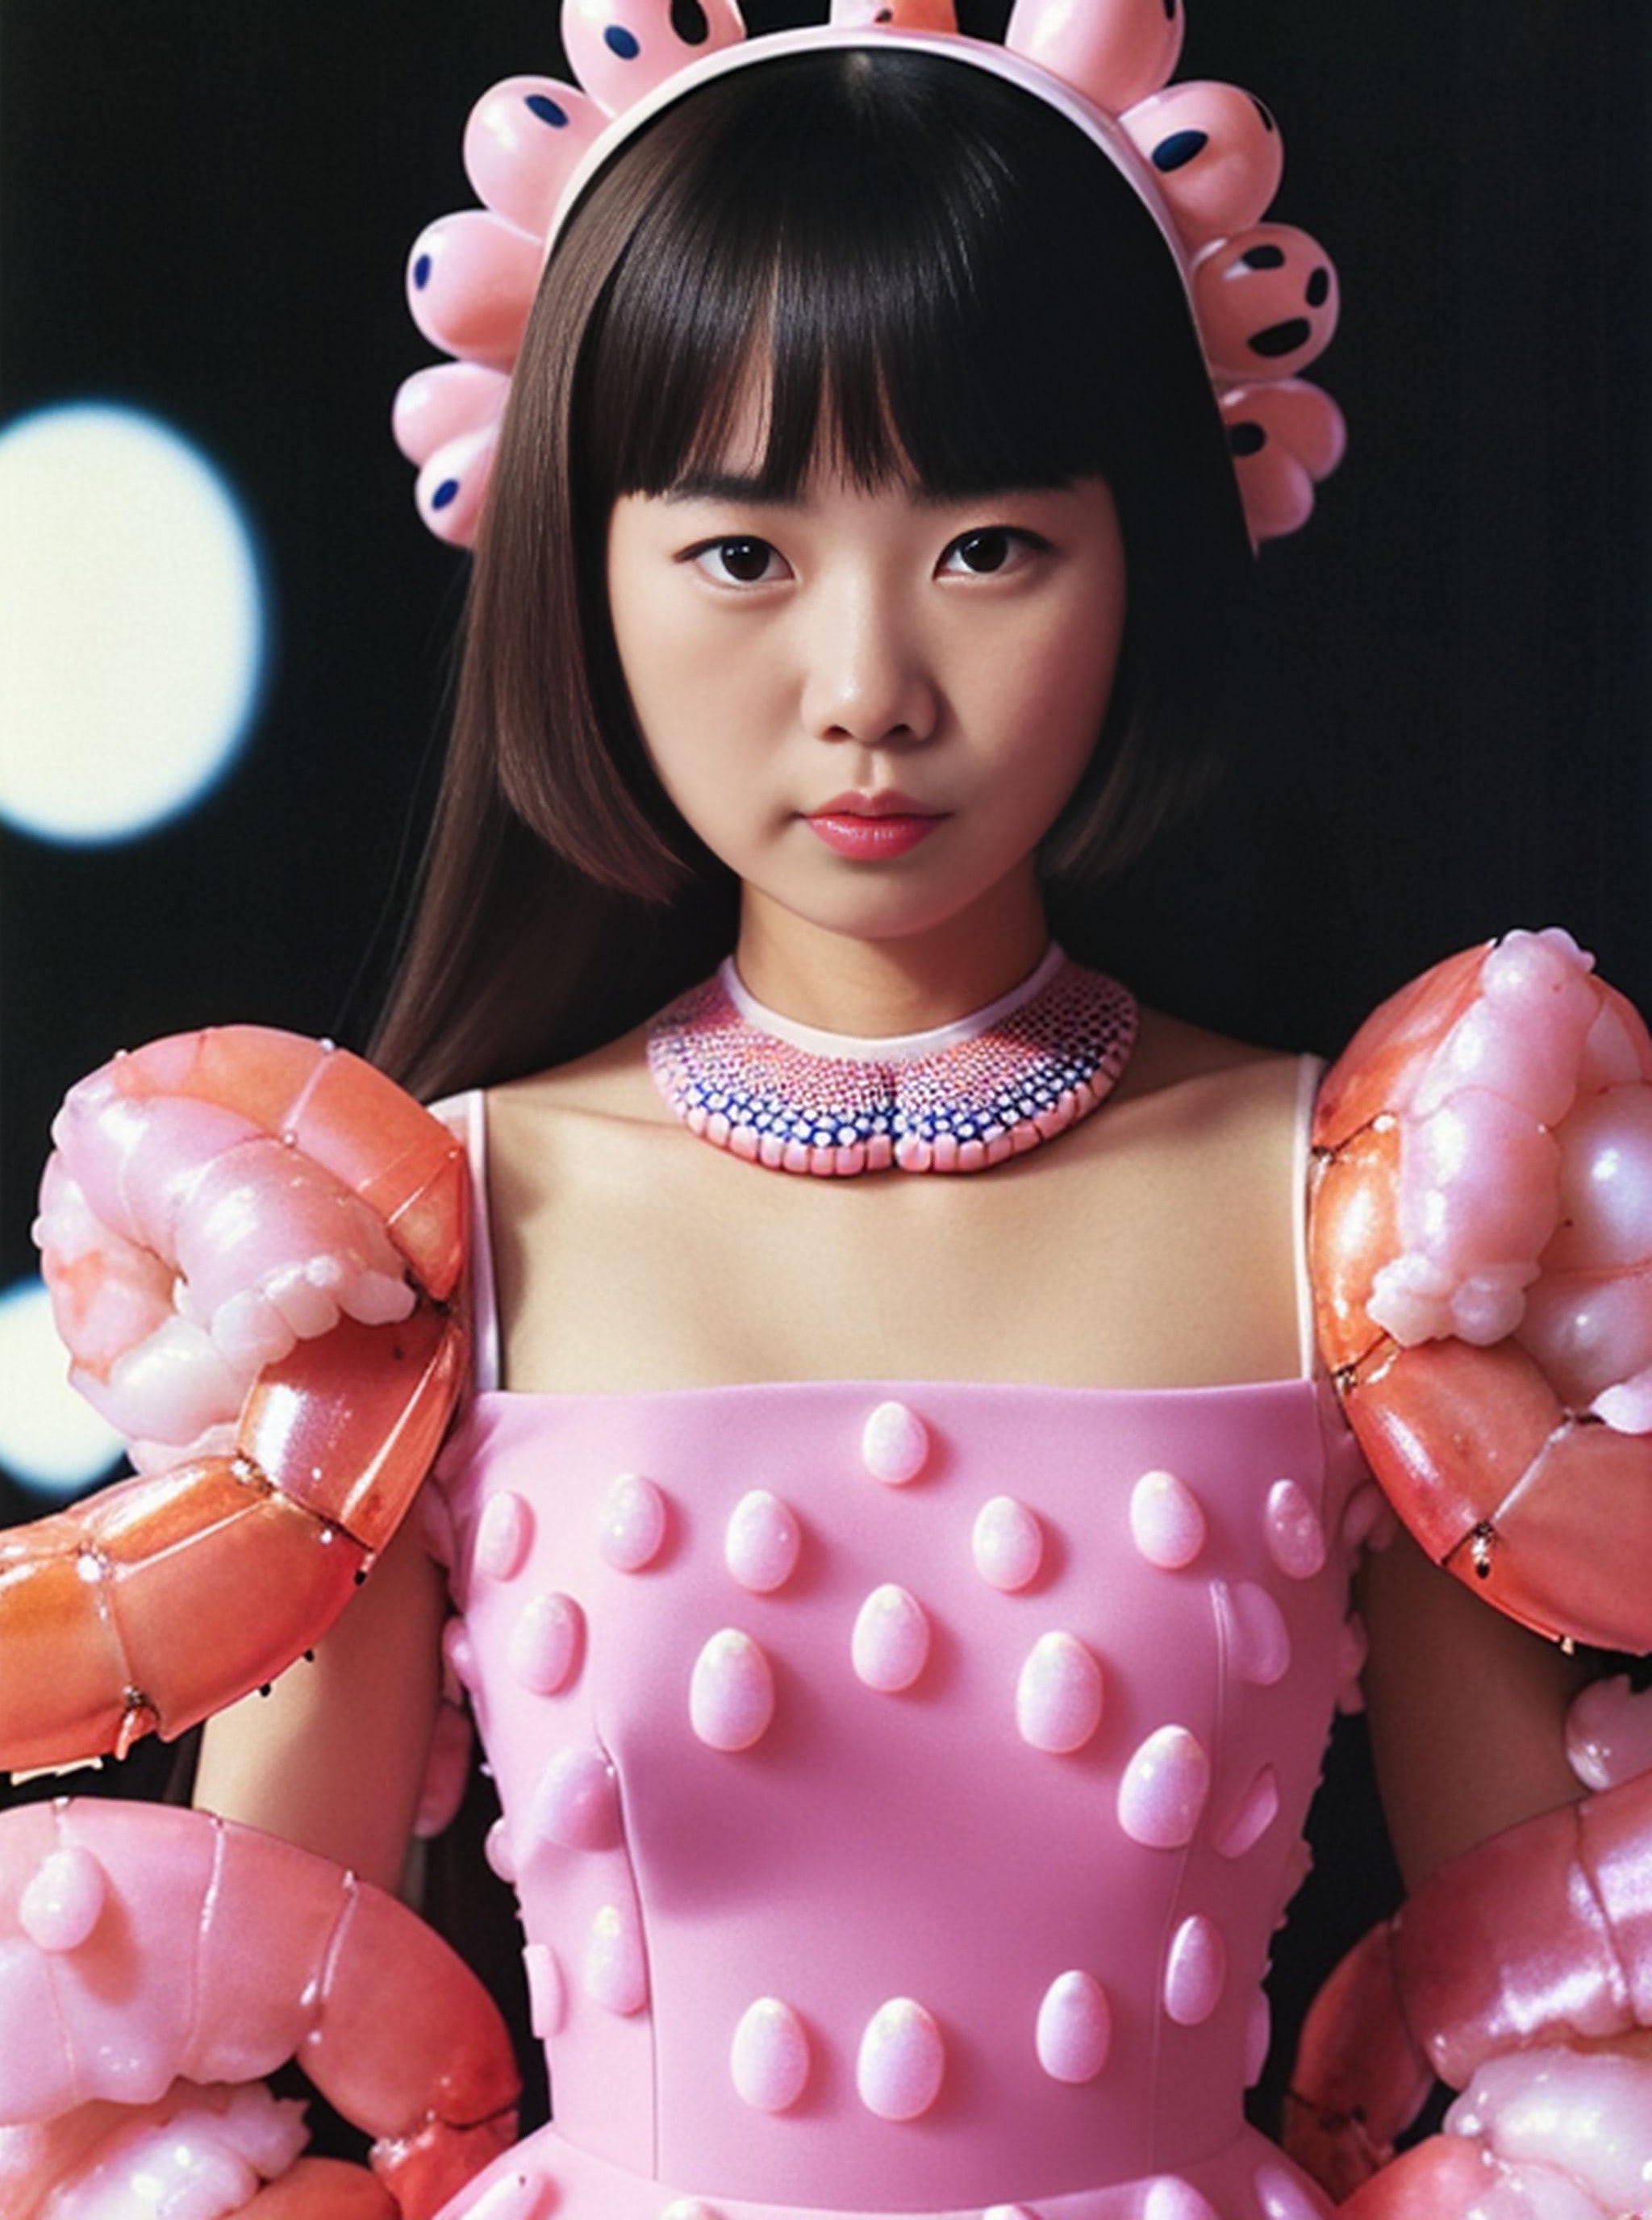 the-shrimp-look-dress-asia